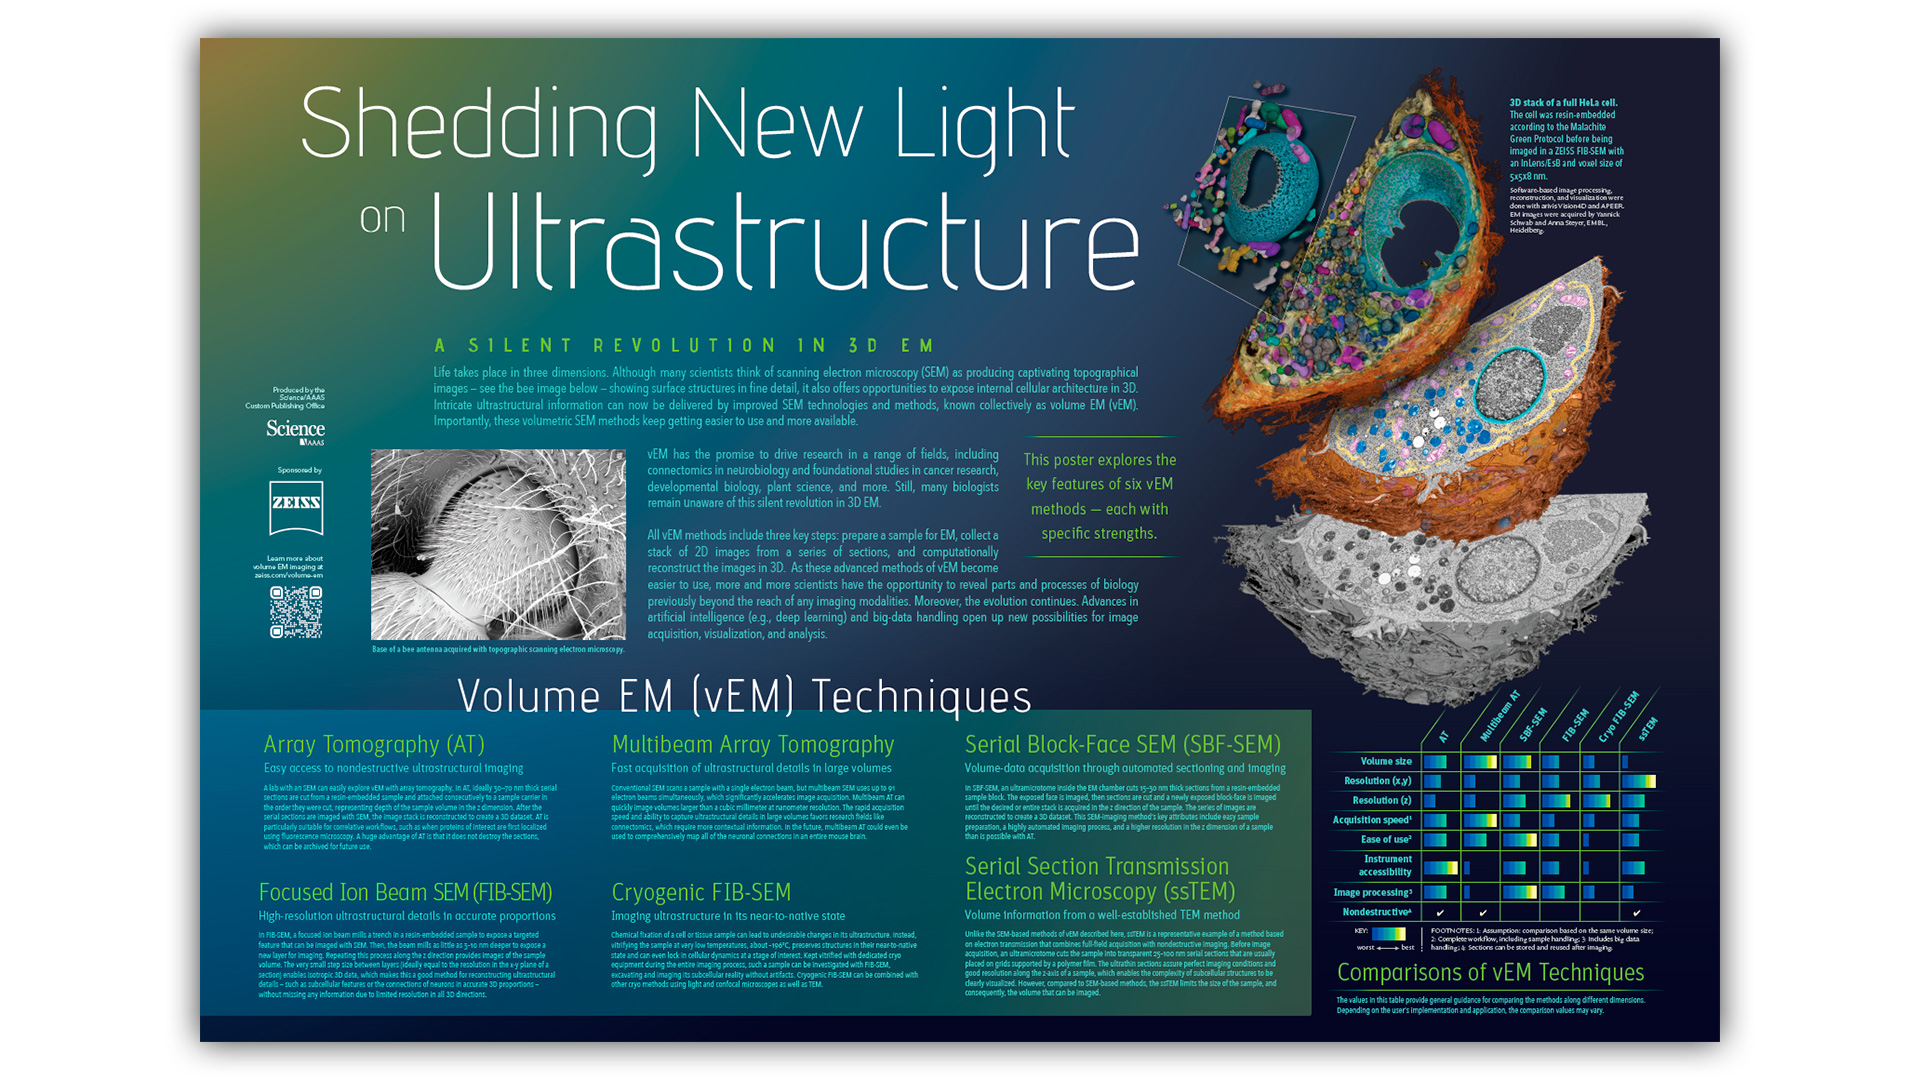 Explore Volume EM Techniques for 3D Ultrastructural Imaging